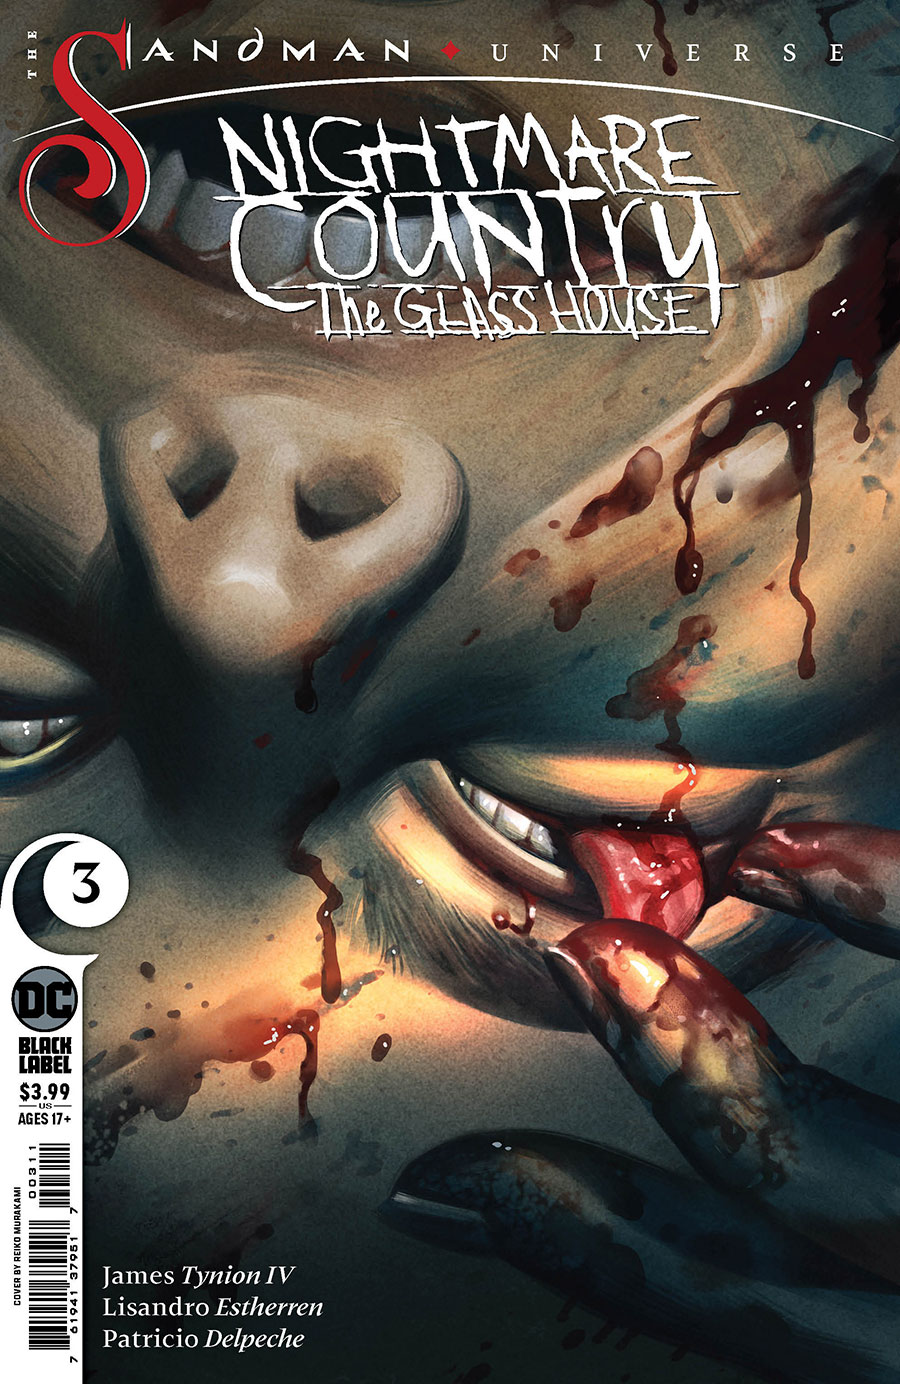 Sandman Universe Nightmare Country The Glass House #3 Cover A Regular Reiko Murakami Cover